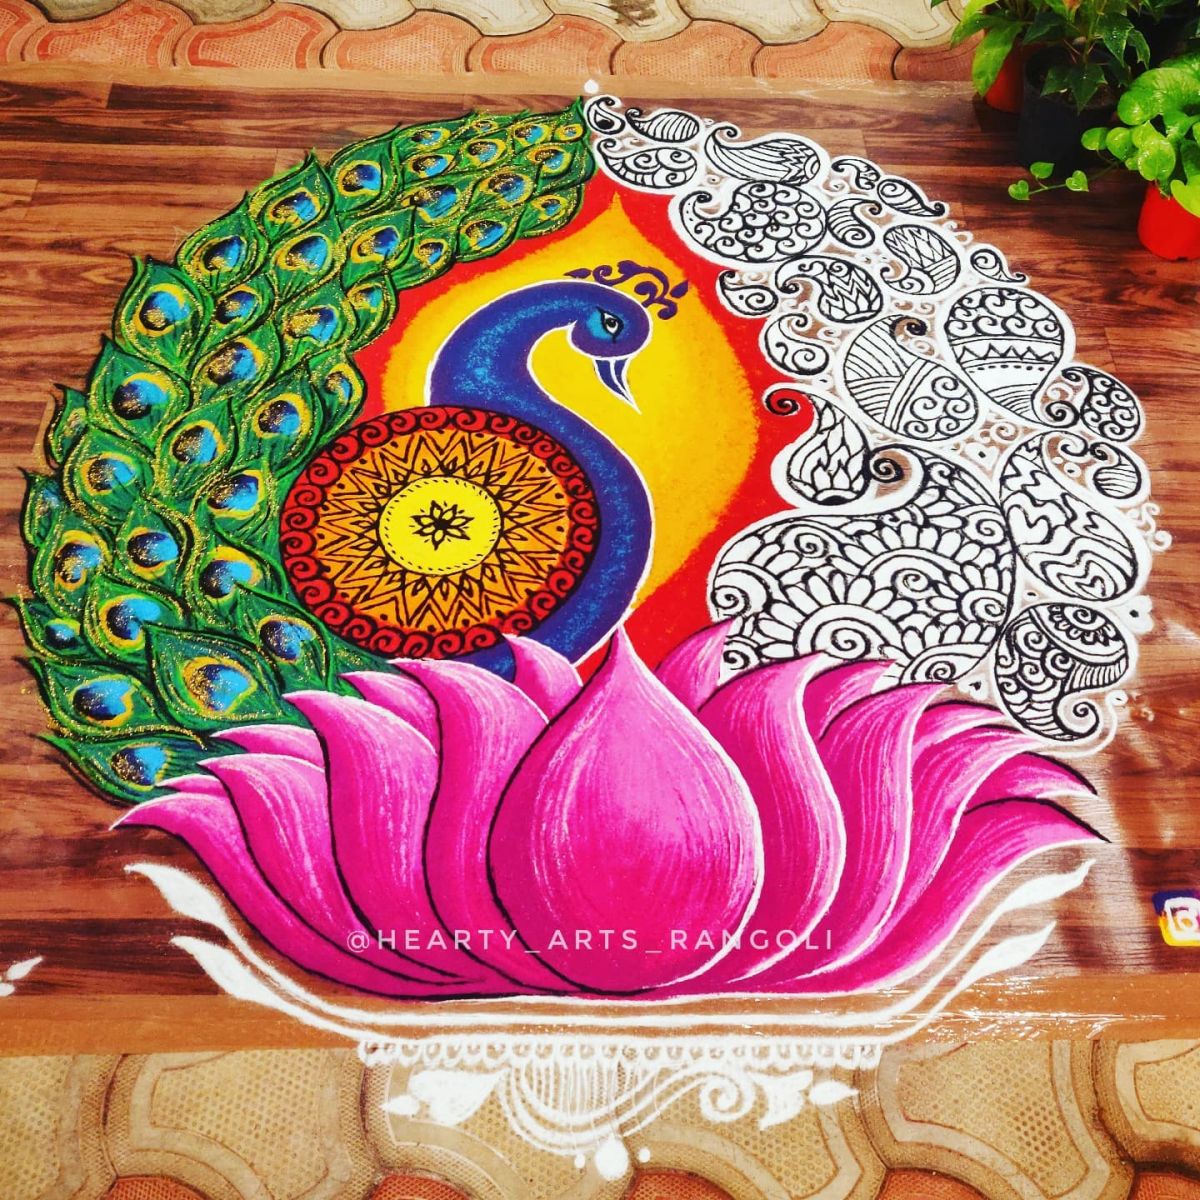 Beautiful Rangoli Design with Flower